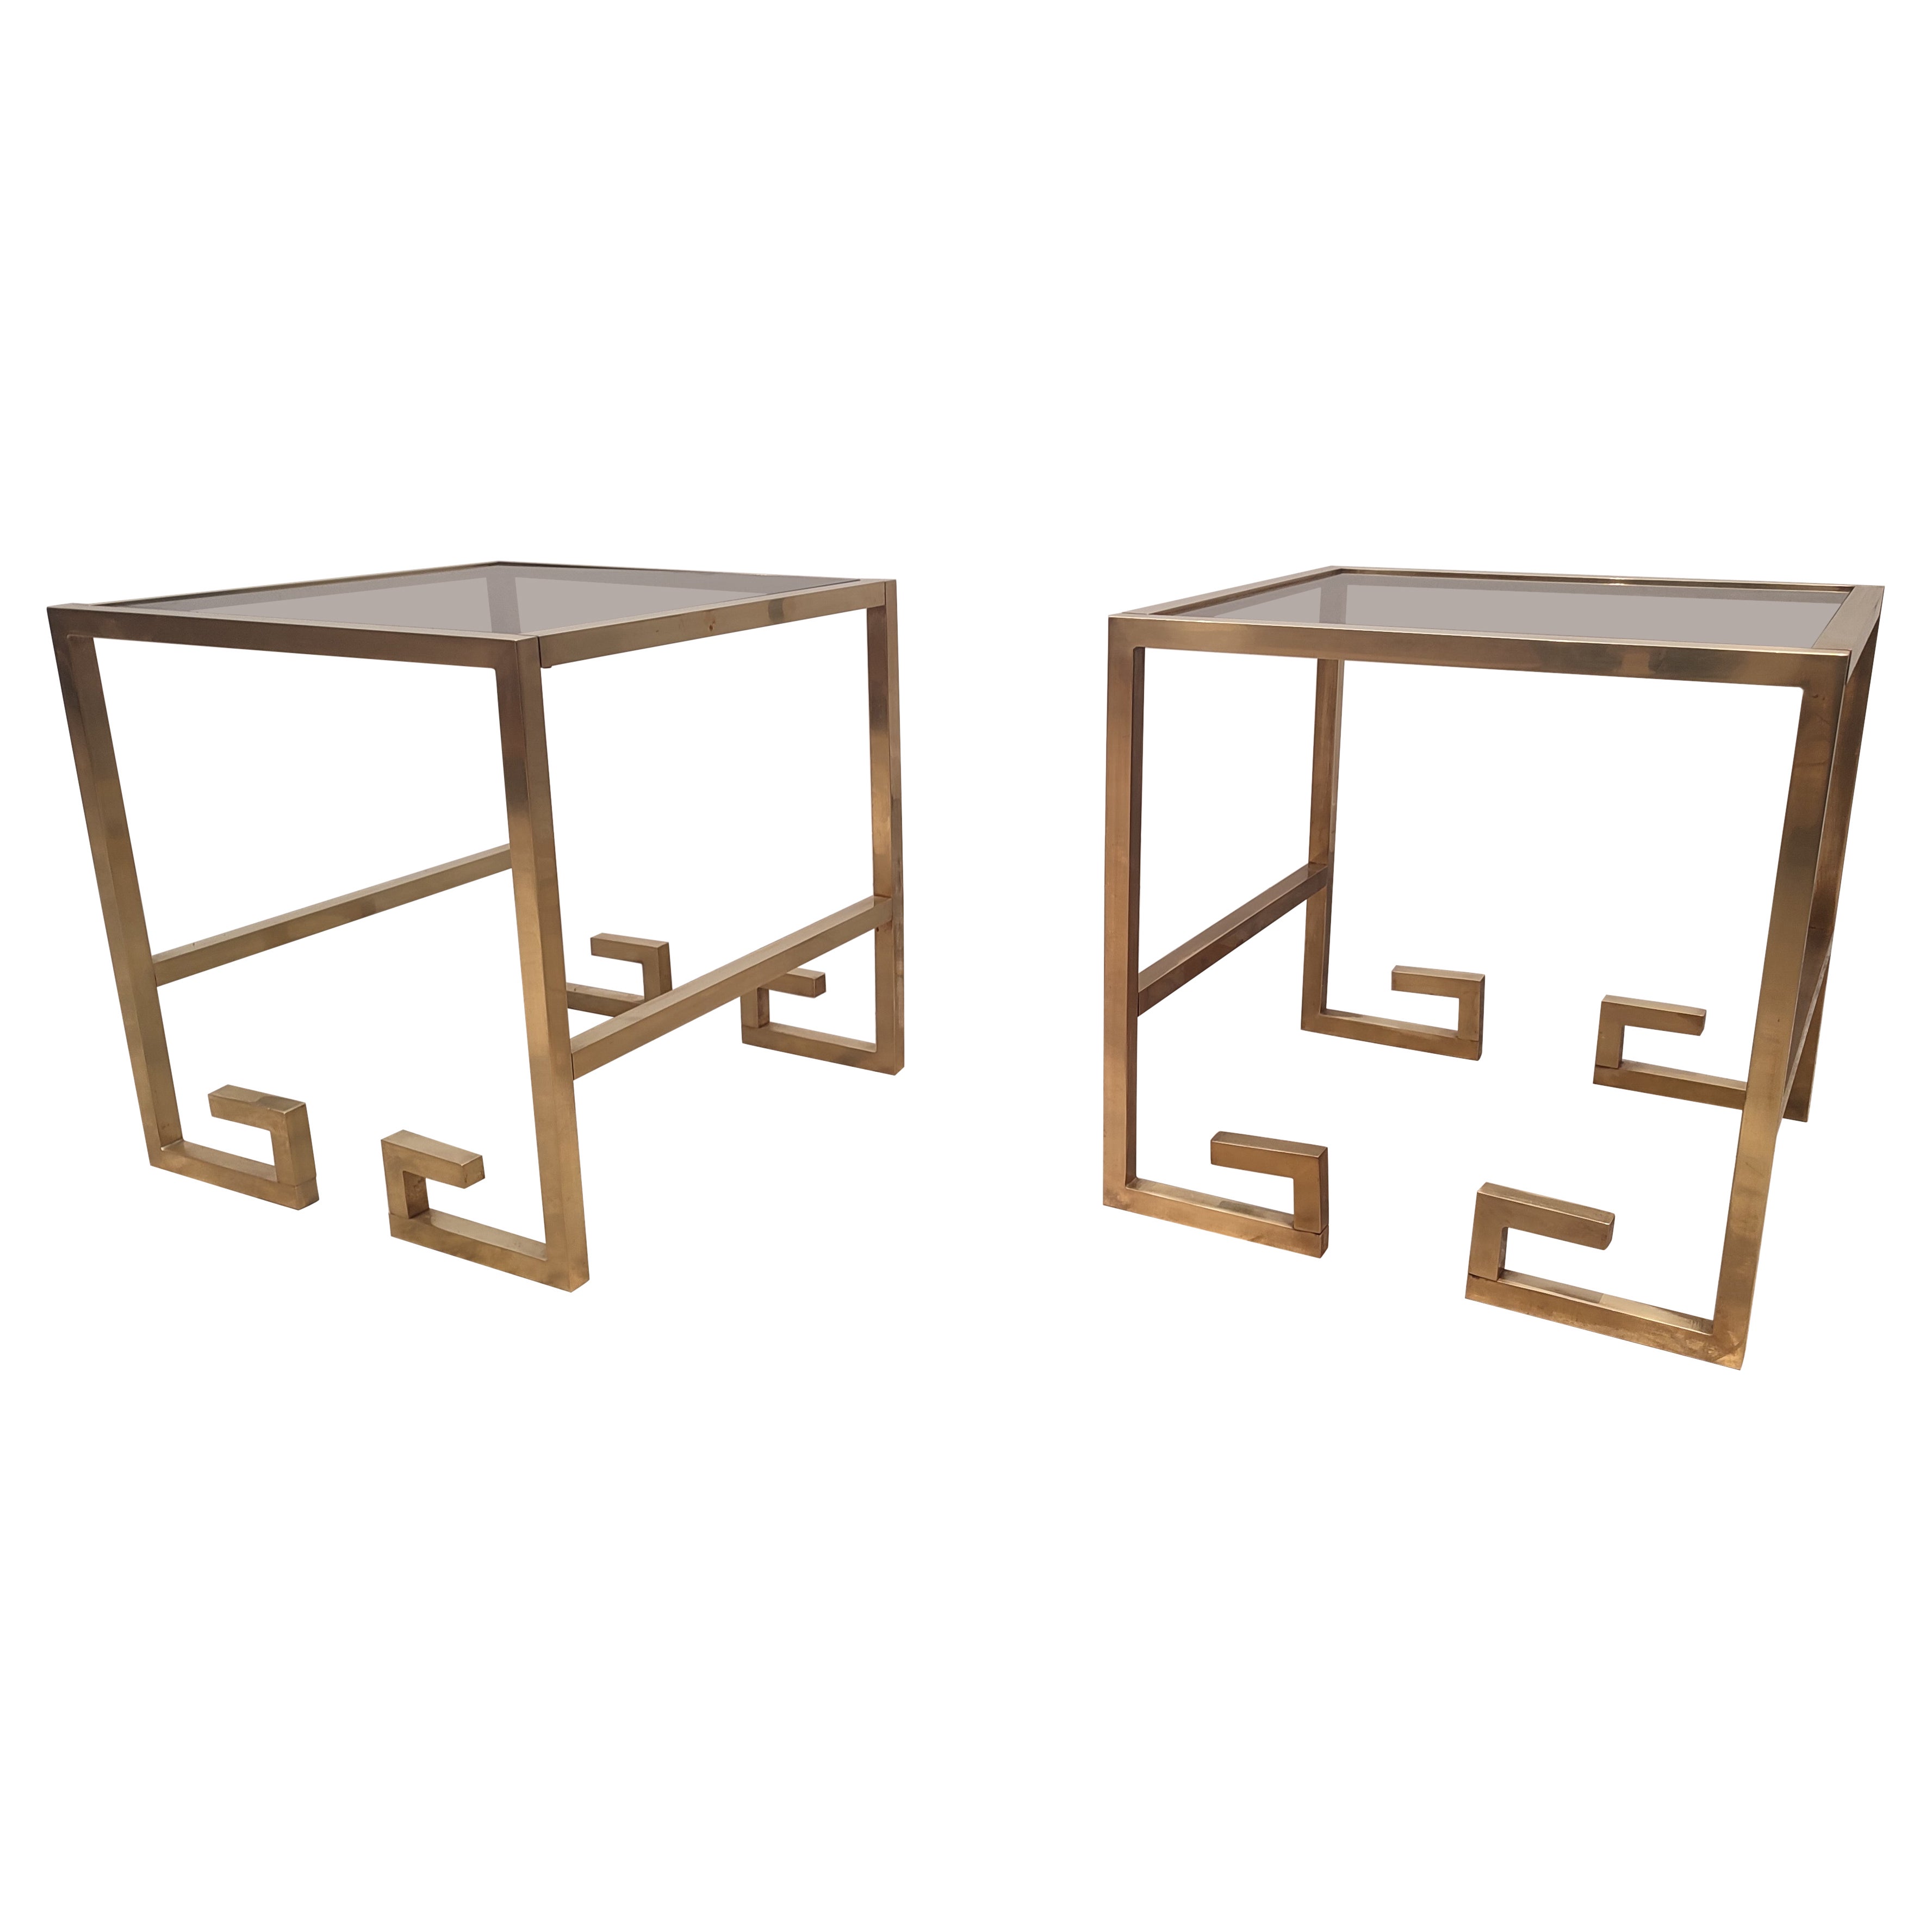 G shape Pair of Side Tables from Belgo Chrom